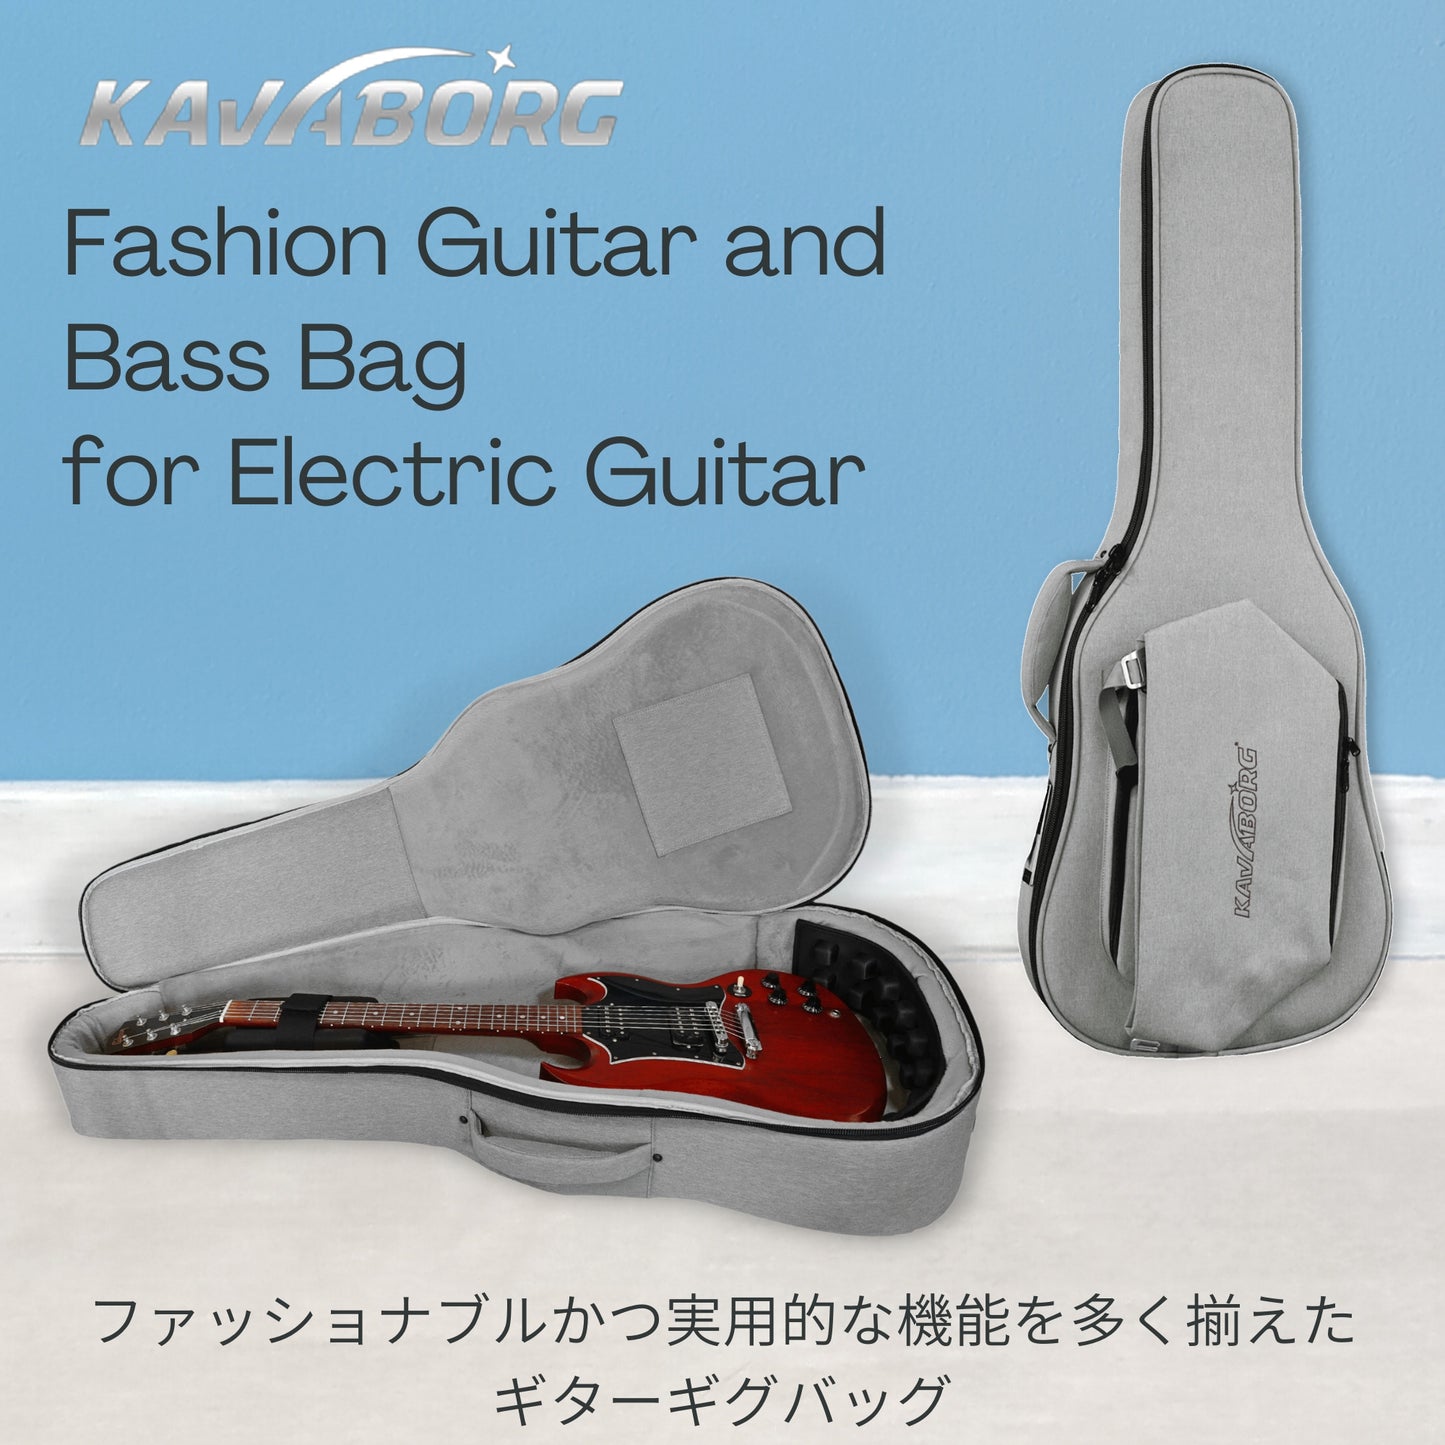 Kavaborg/Fashion Guitar and Bass Bag for Electric Guitar エレキギター用